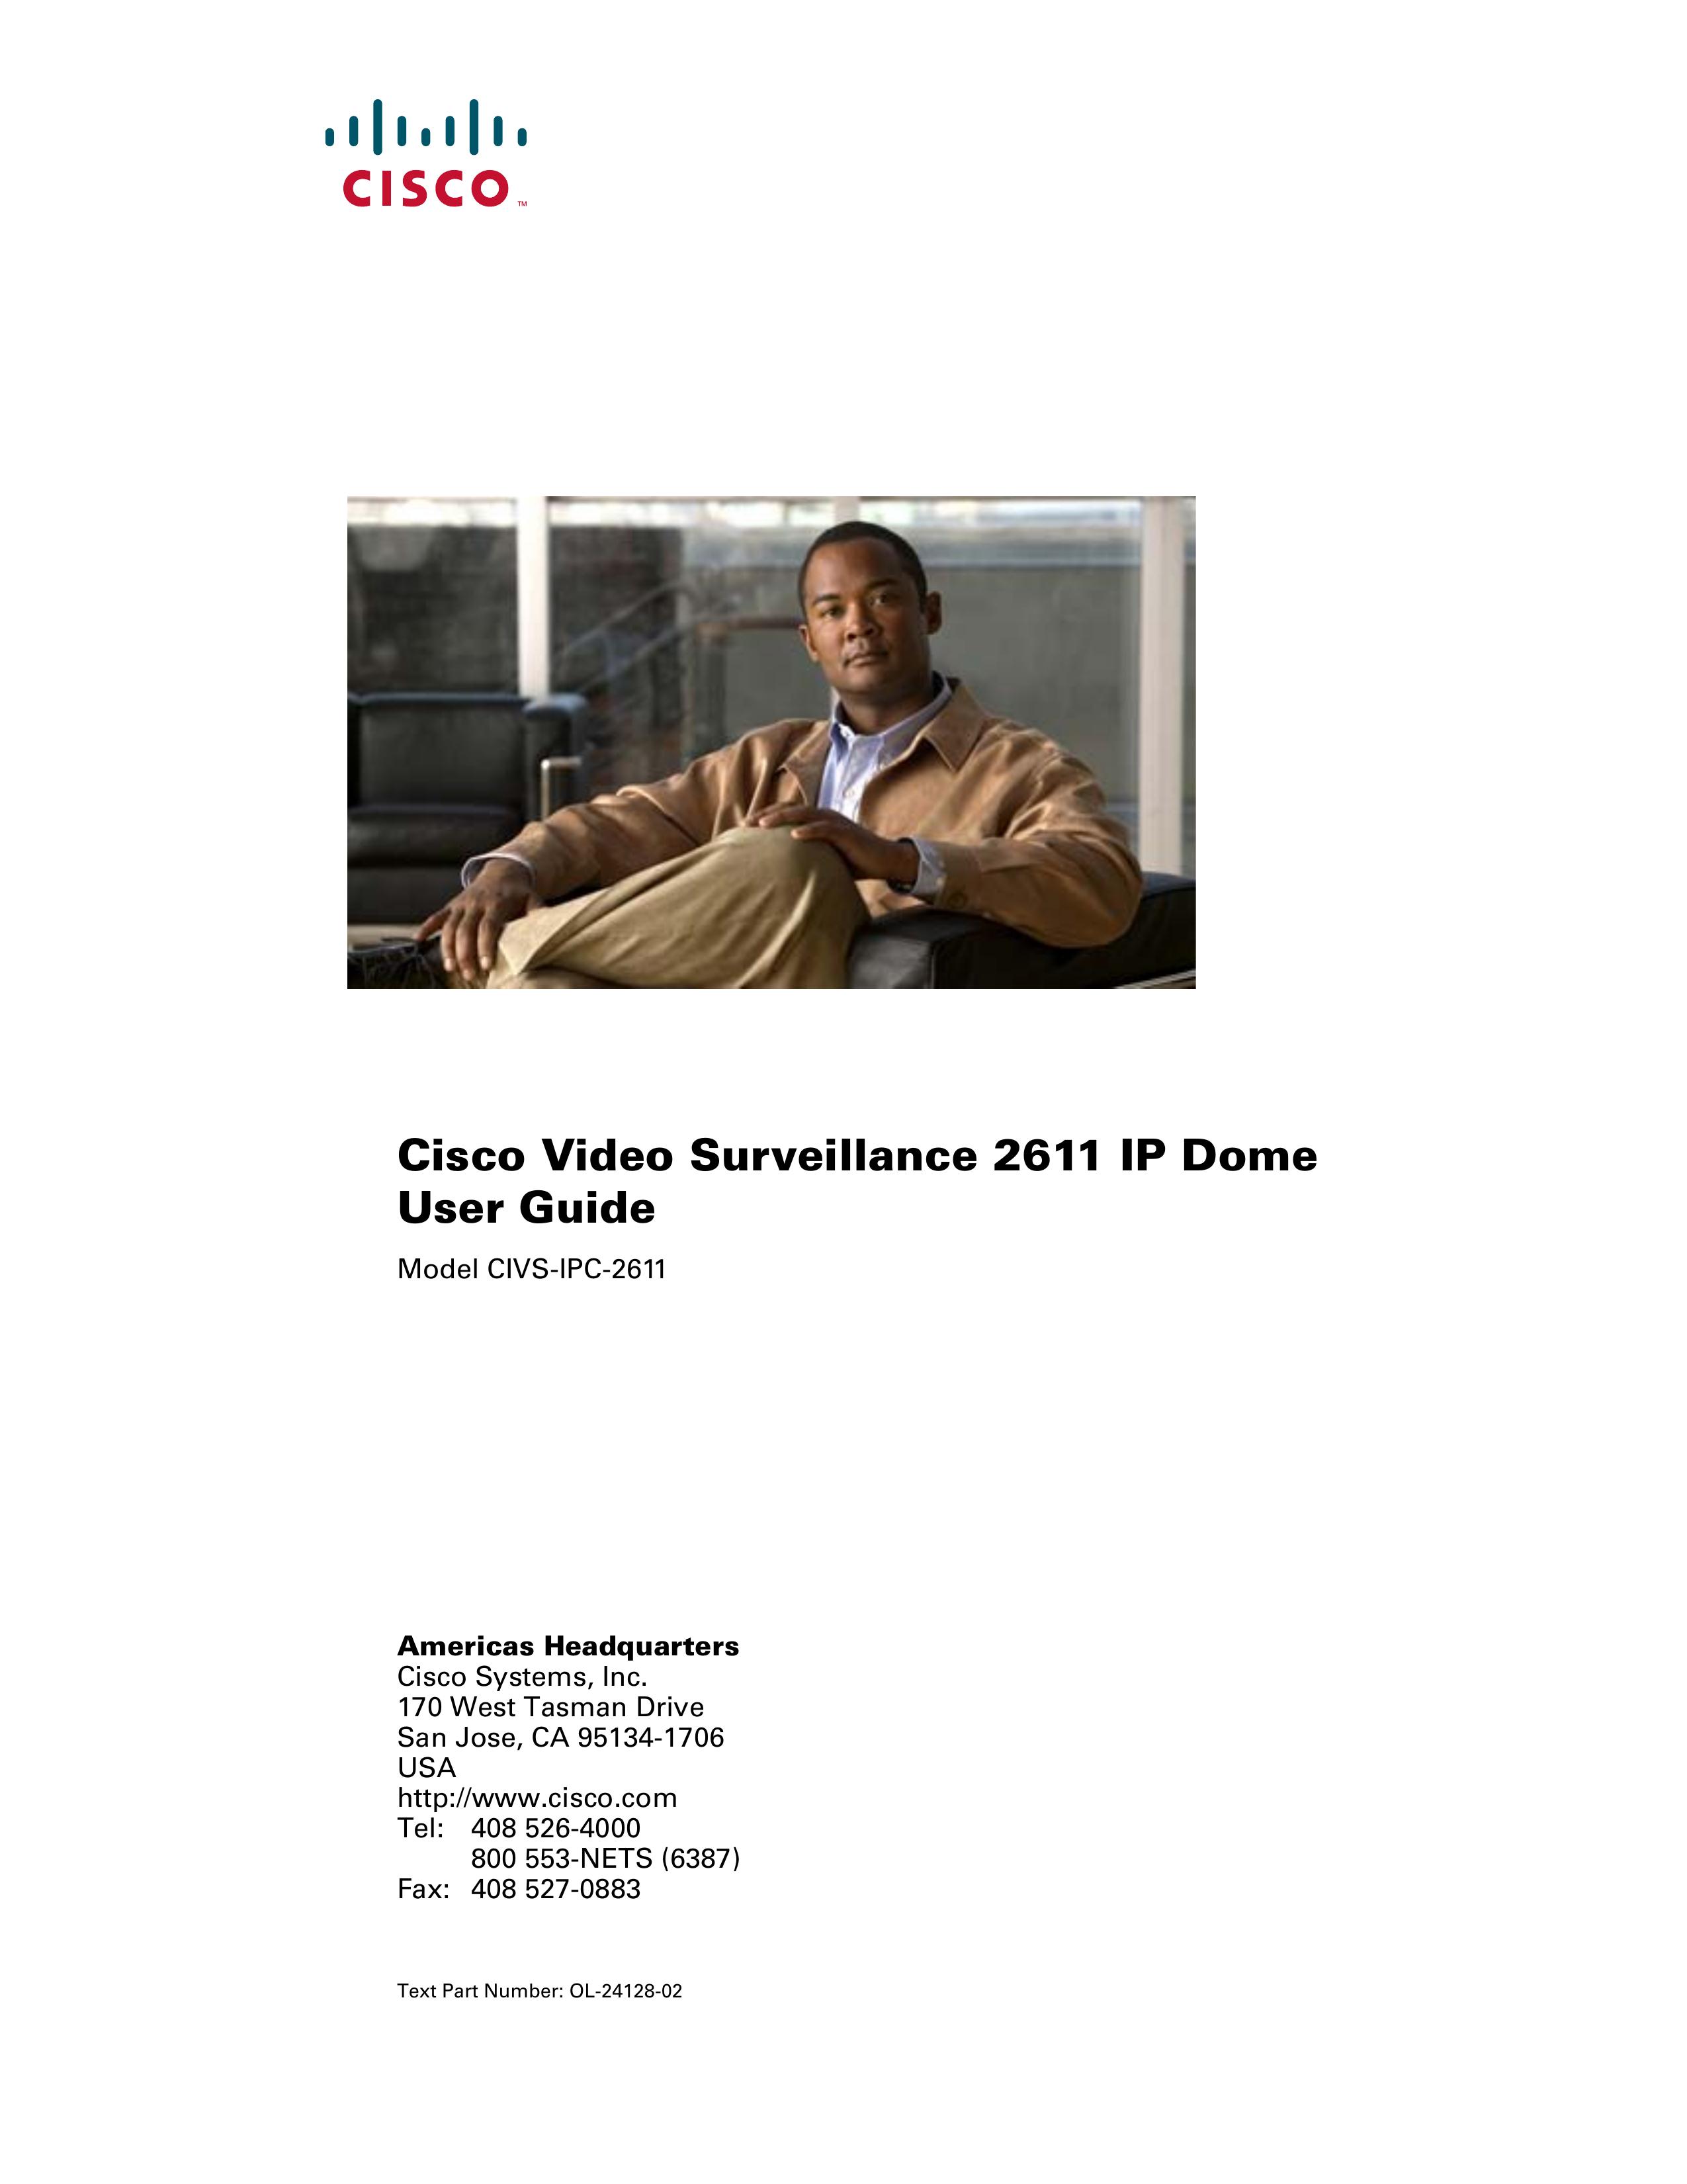 Cisco Systems CIVIS-IPC-2611 Security Camera User Manual